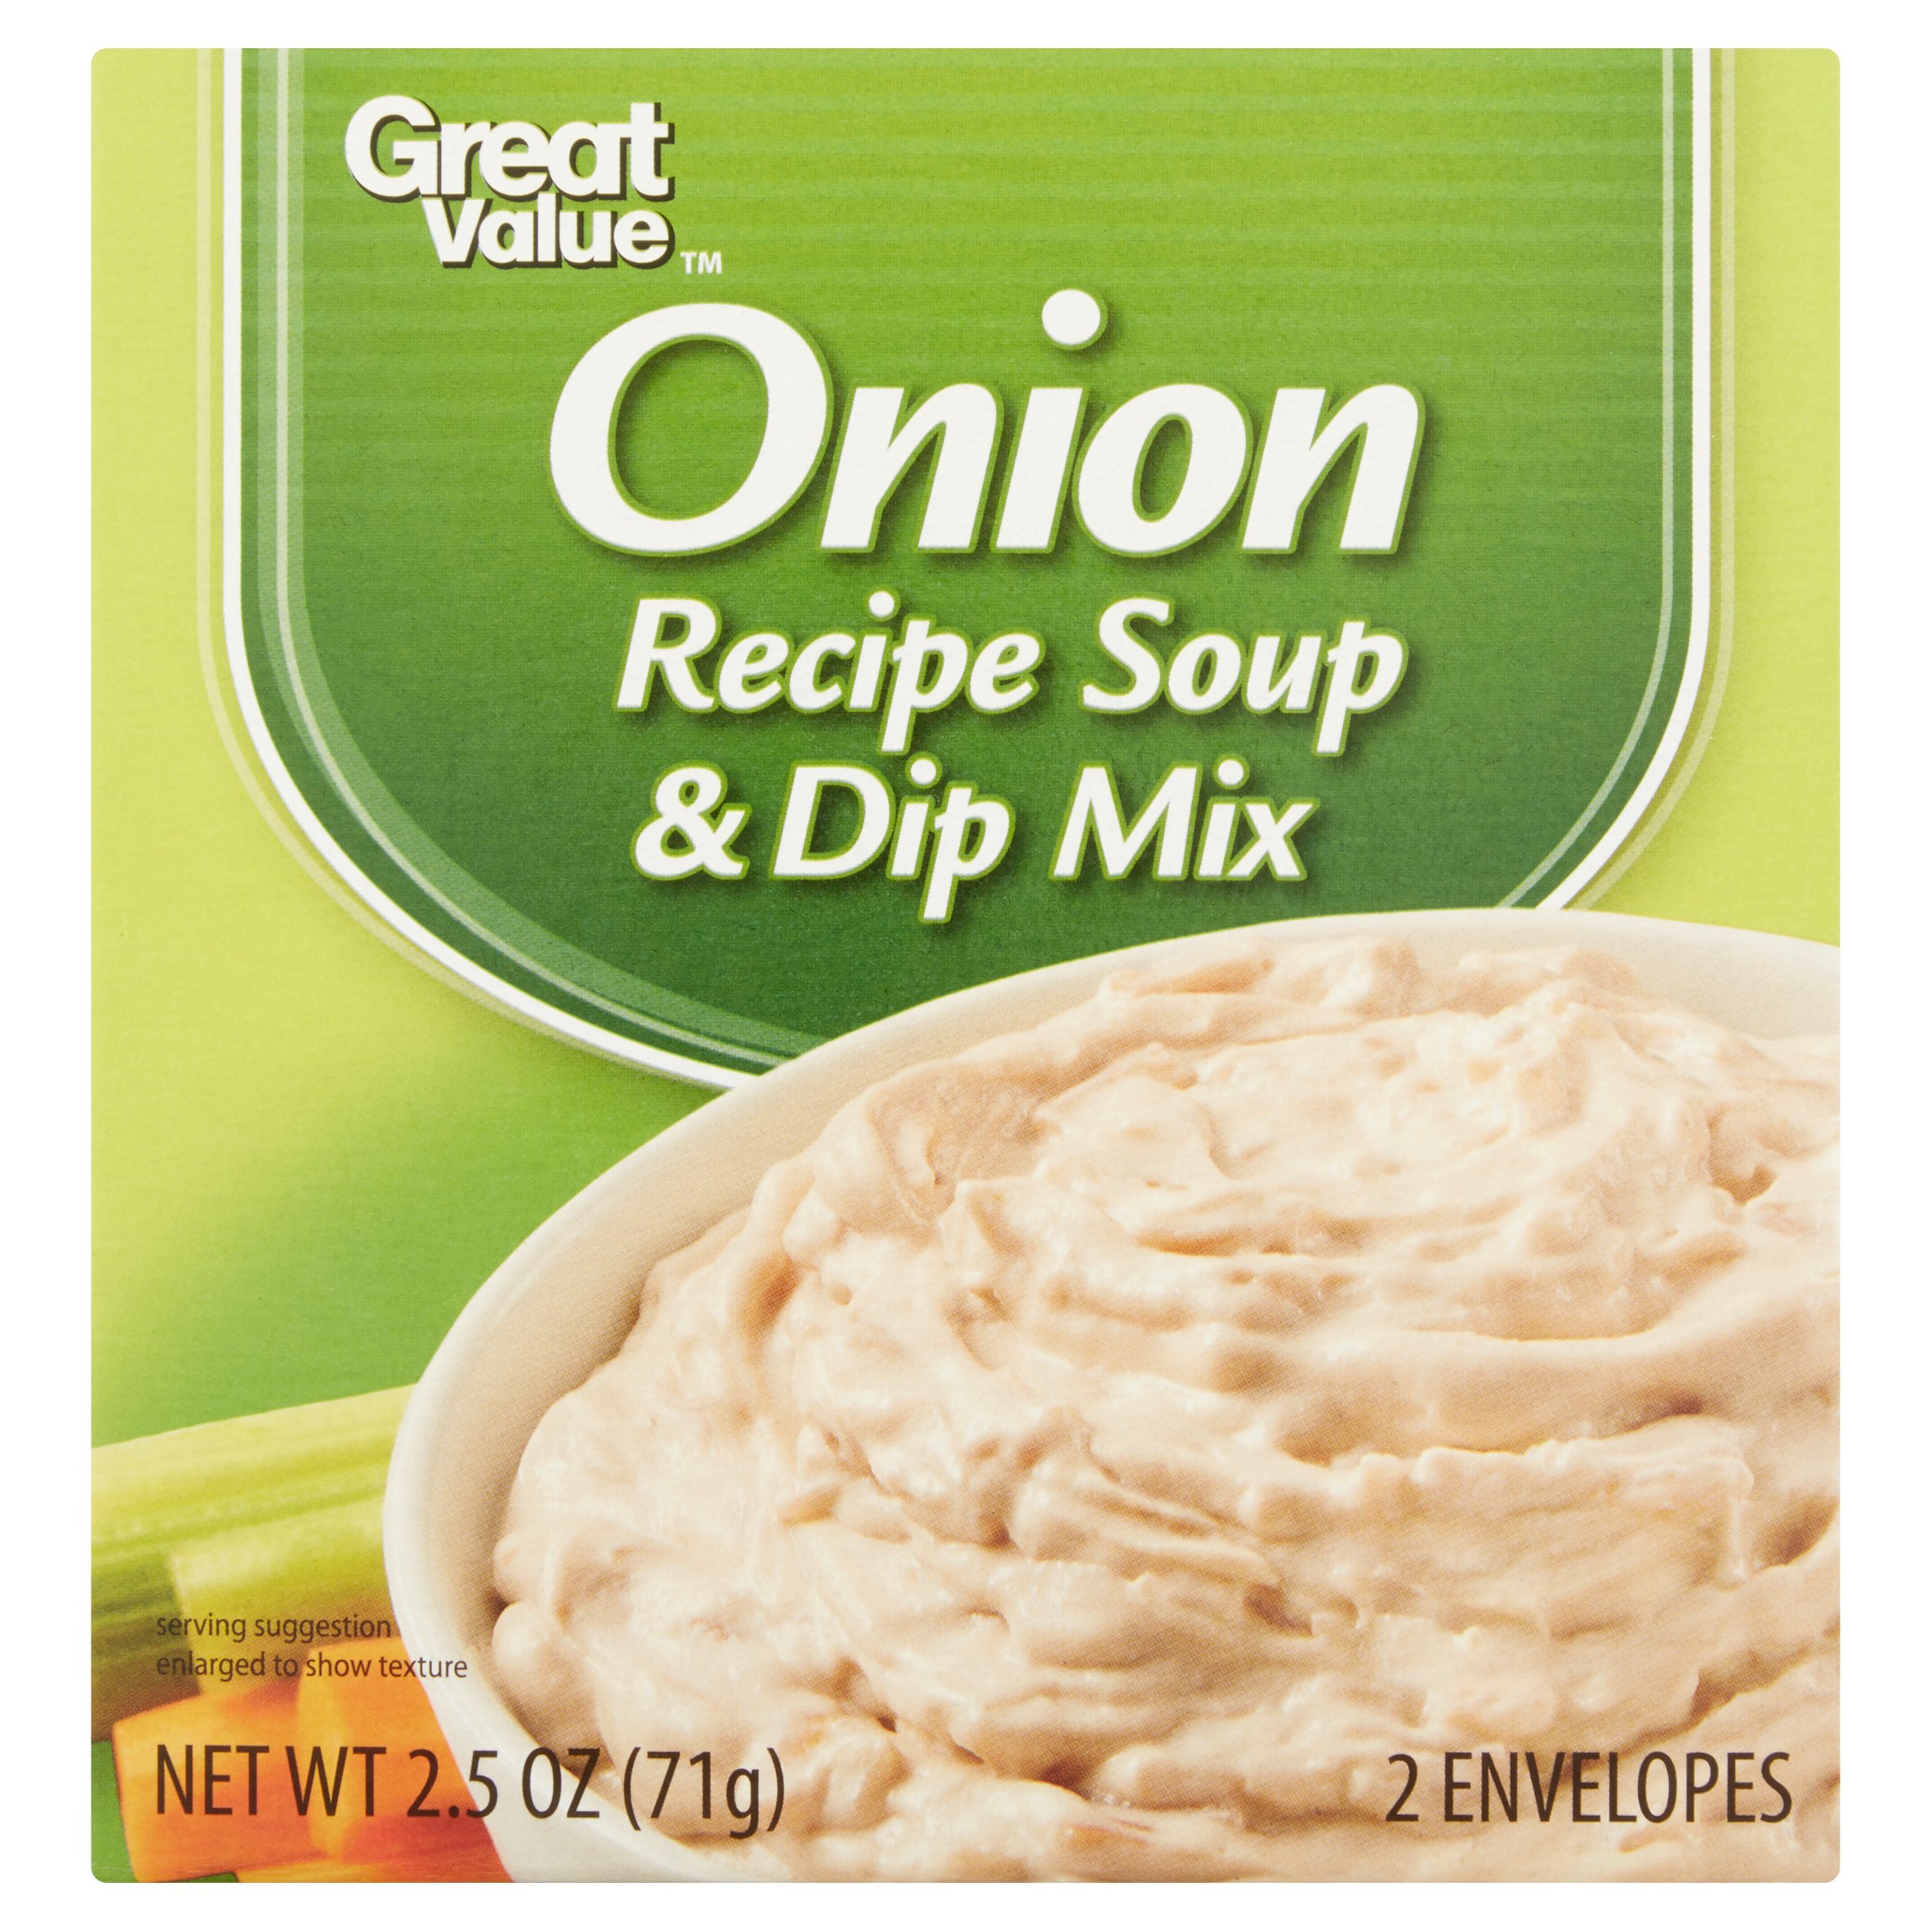 Great Value Onion Recipe Soup & Dip Mix 2 Envelopes